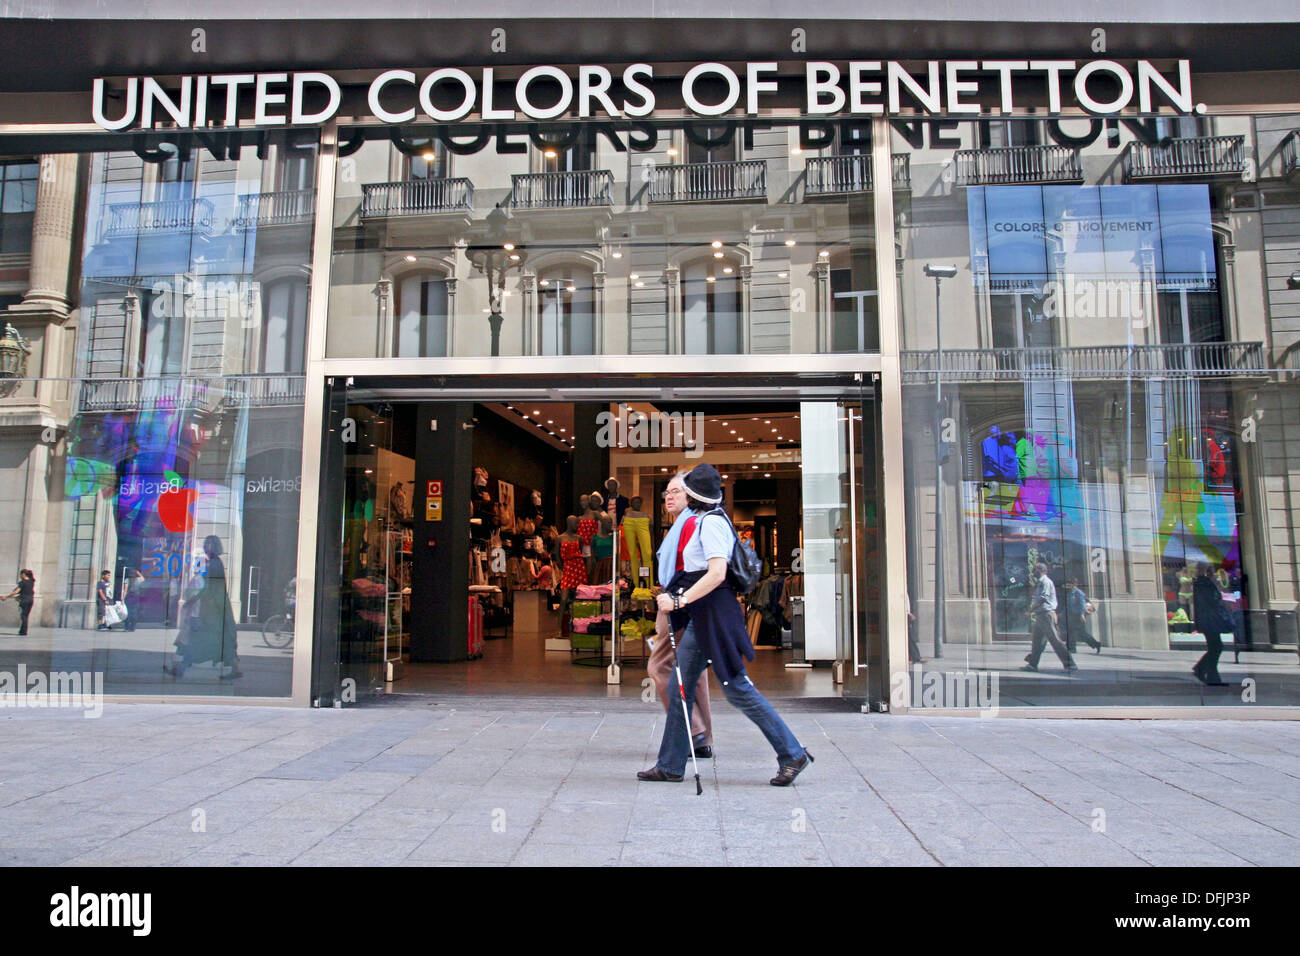 United Colors of Benetton, Portal de L´Angel, Barcelona, Katalonien, Spanien  Stockfotografie - Alamy